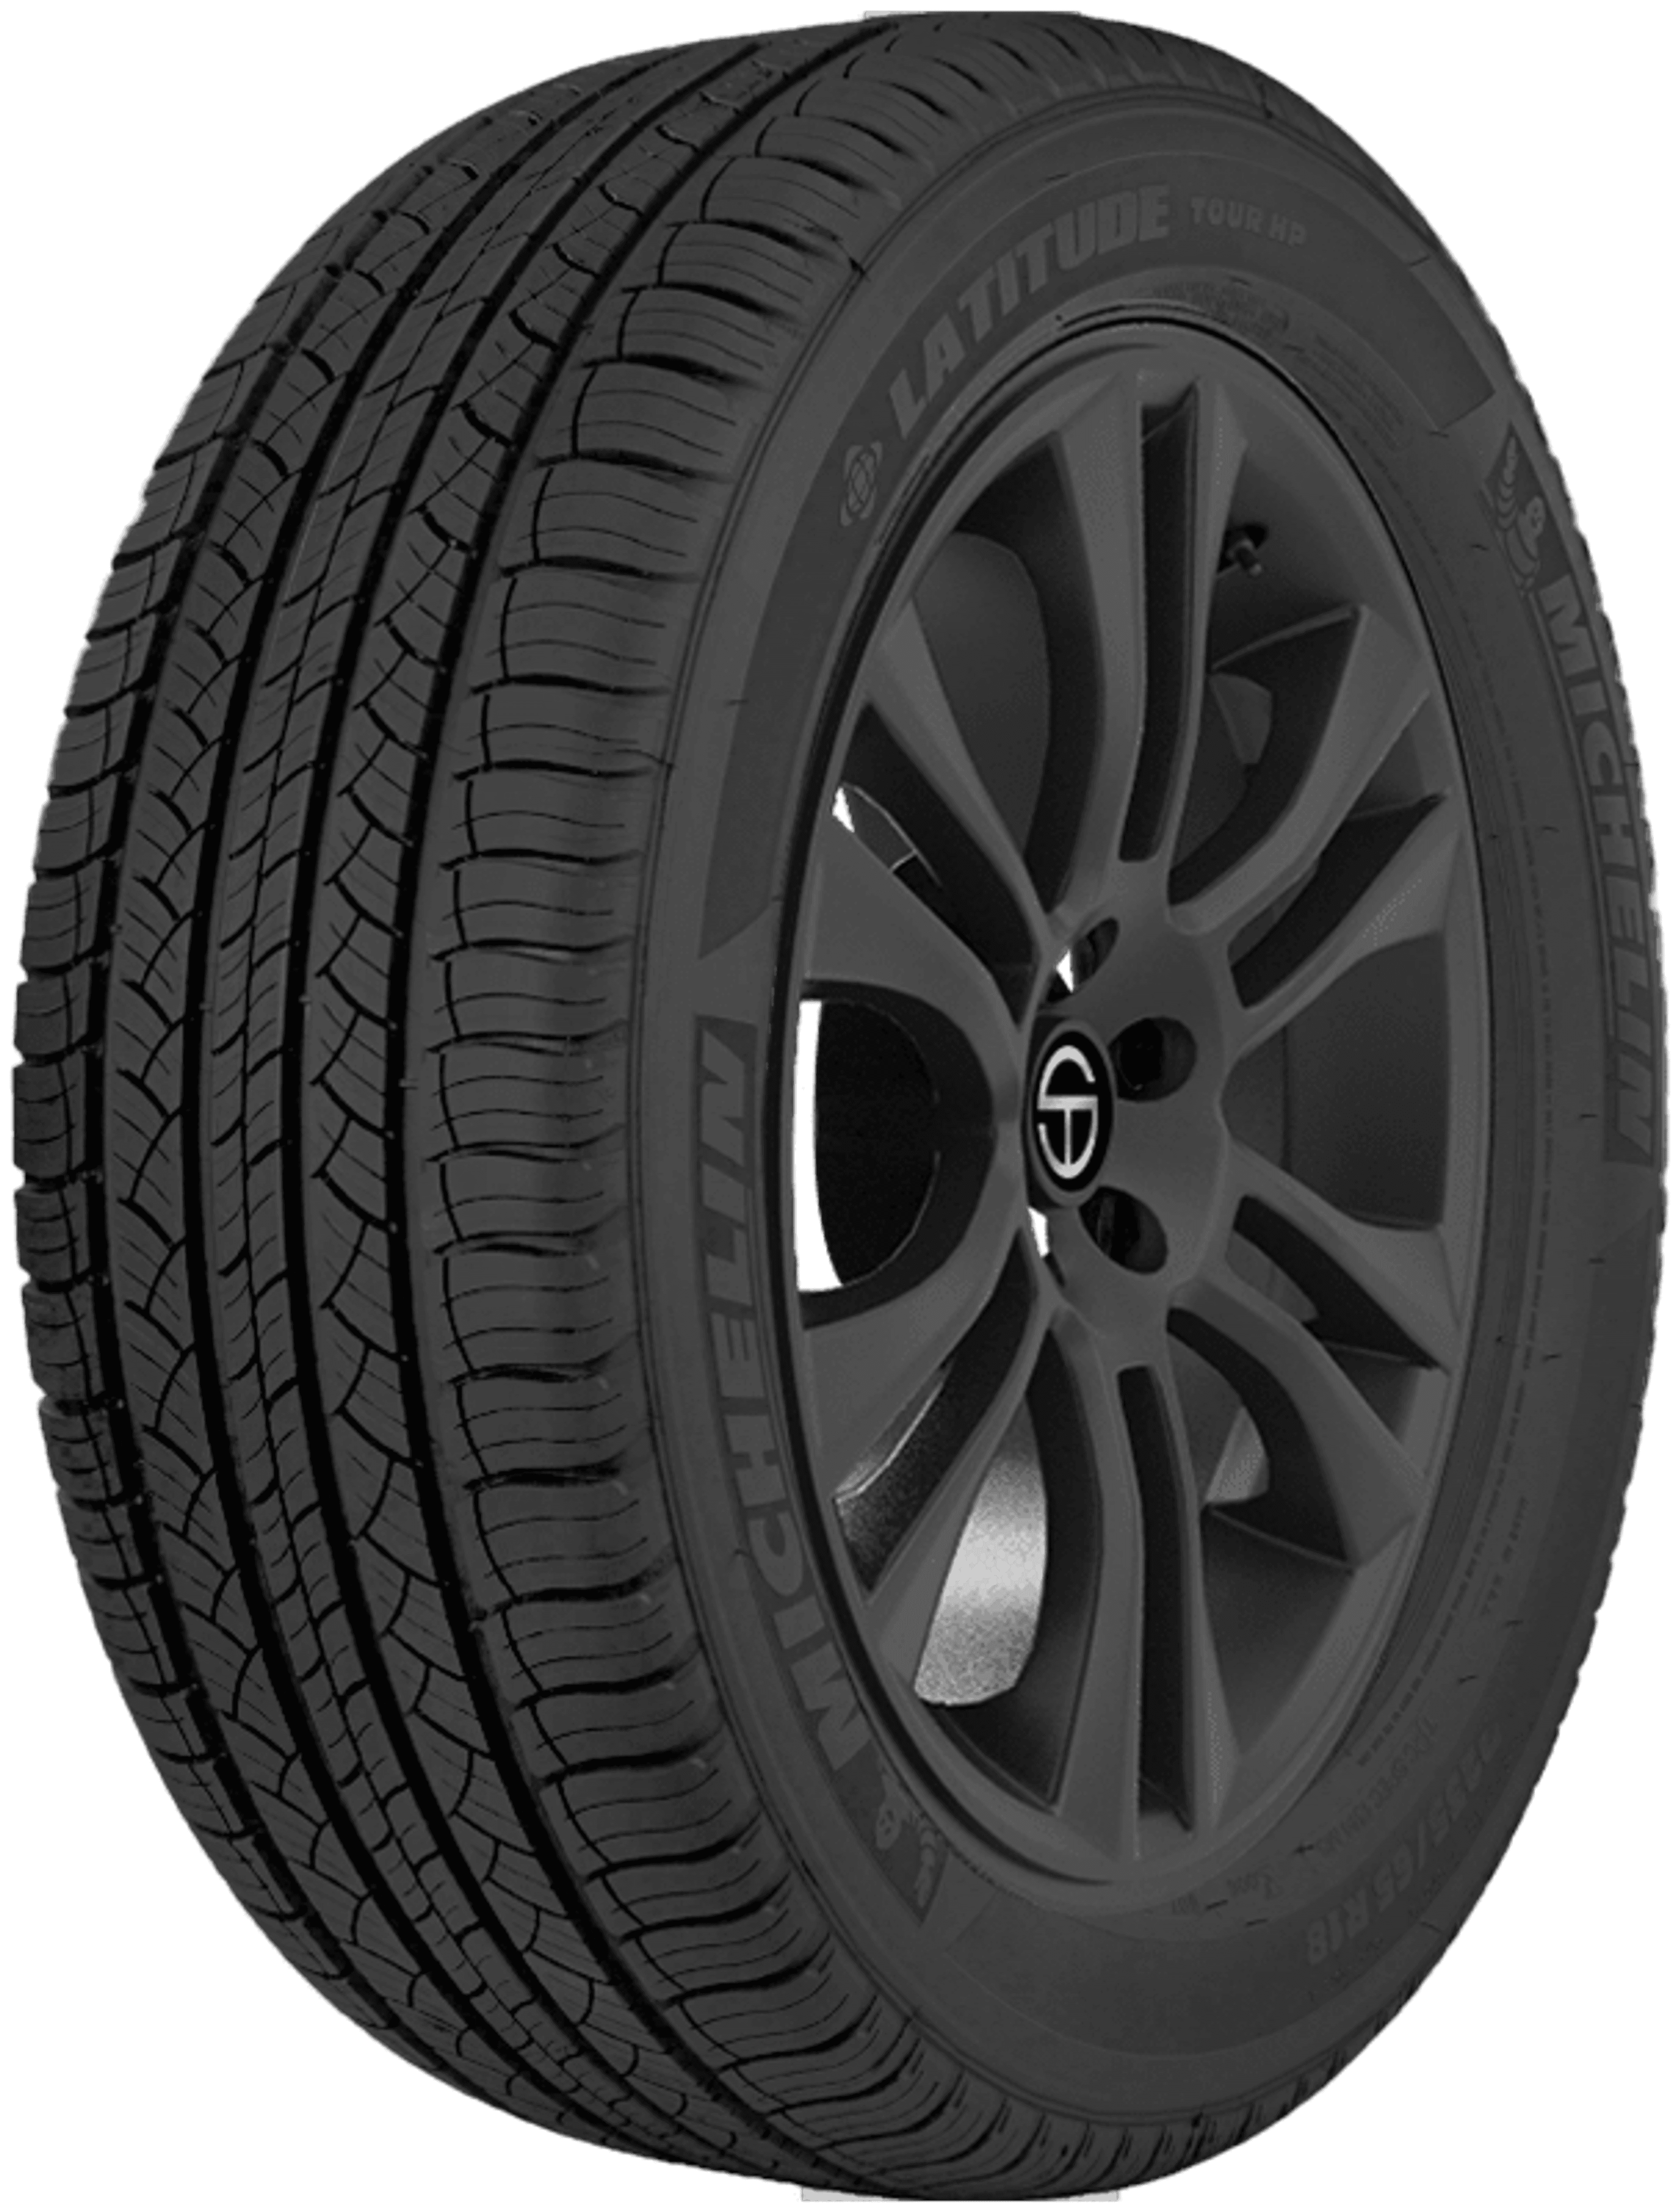 Buy Michelin Latitude Tour HP Tires Online | SimpleTire